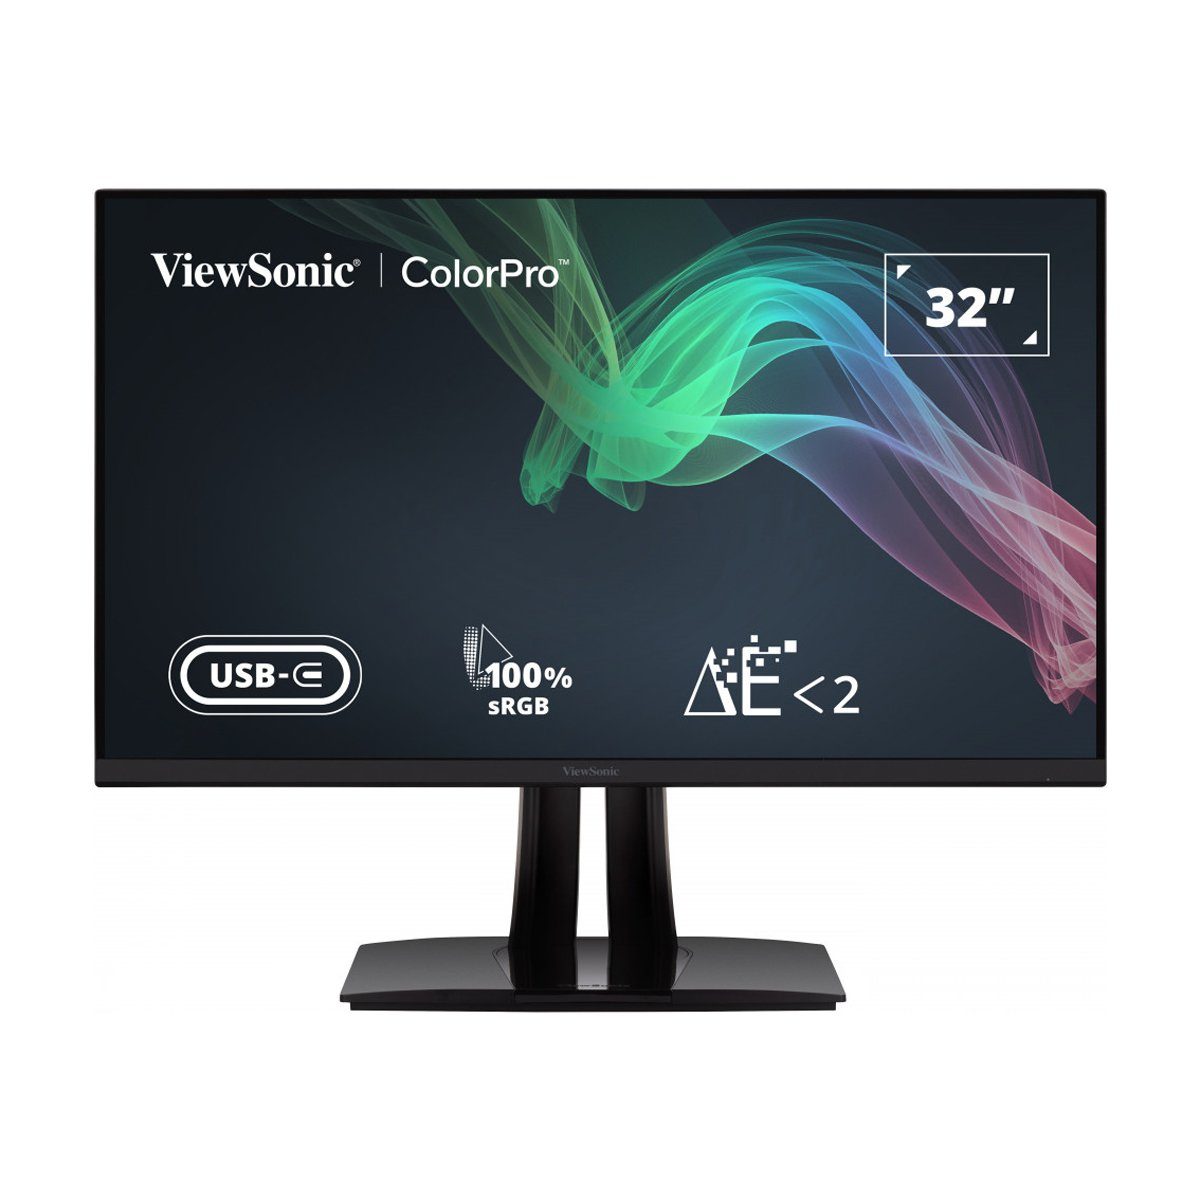 Viewsonic ViewSonic ColorPro VP3256-4K (32) 81,3cm LED-Moni LED-Monitor  (3.840 x 2.160 Pixel (16:9), 5 ms Reaktionszeit, 60 Hz, IPS Panel)